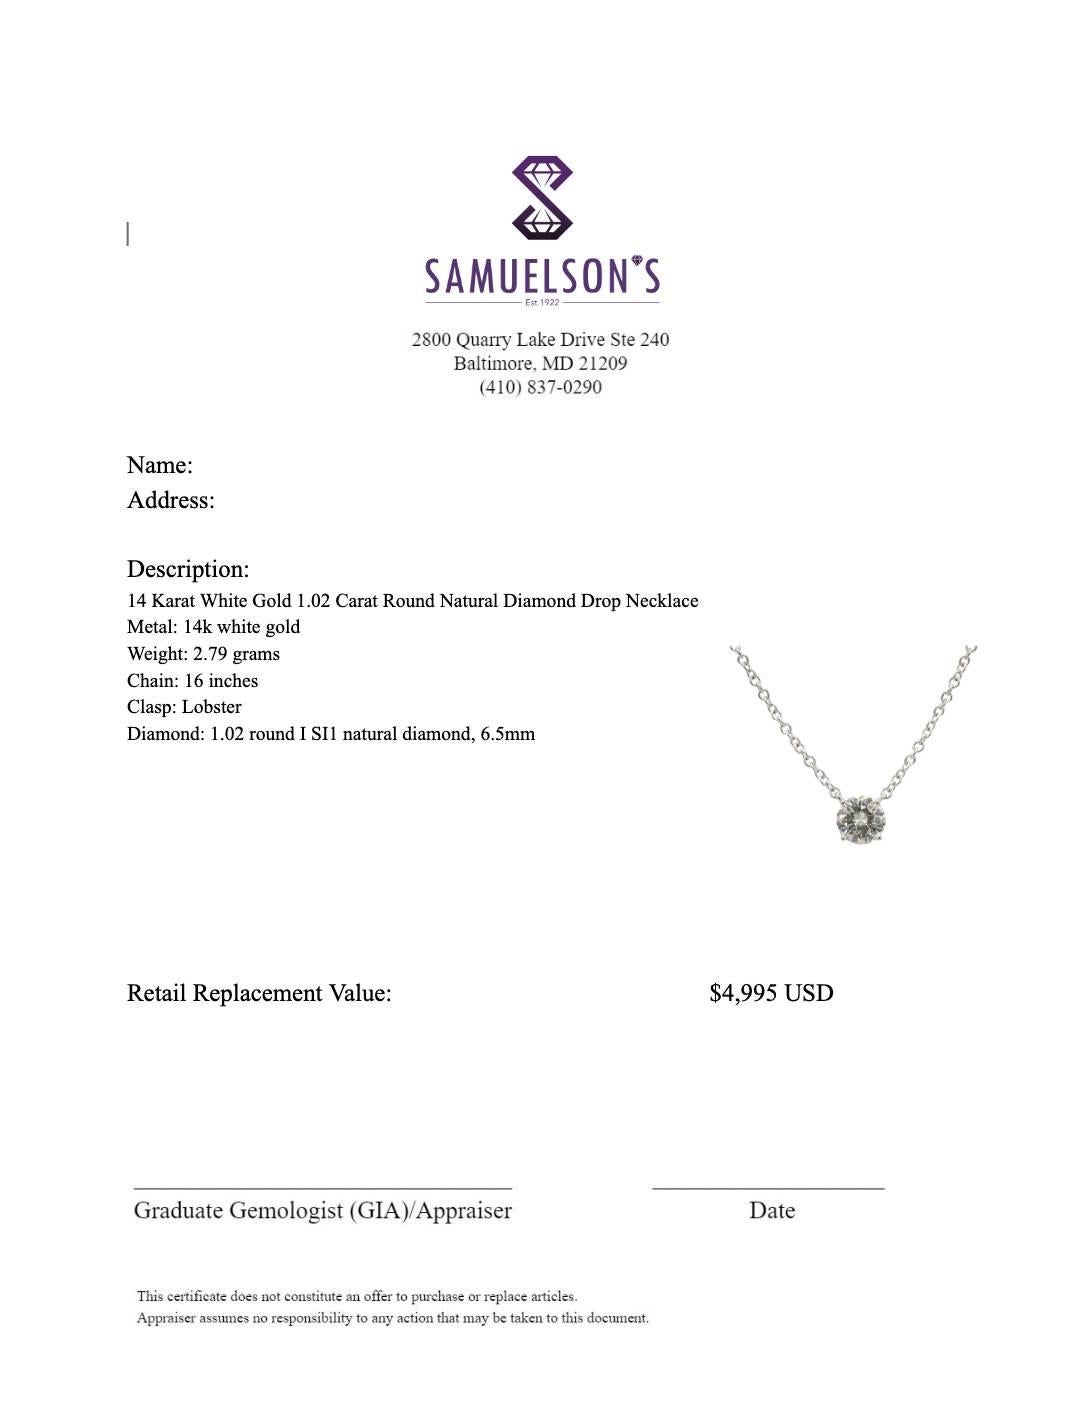 Women's or Men's 14 Karat White Gold 1.02 Carat Round Natural Diamond Drop Necklace For Sale